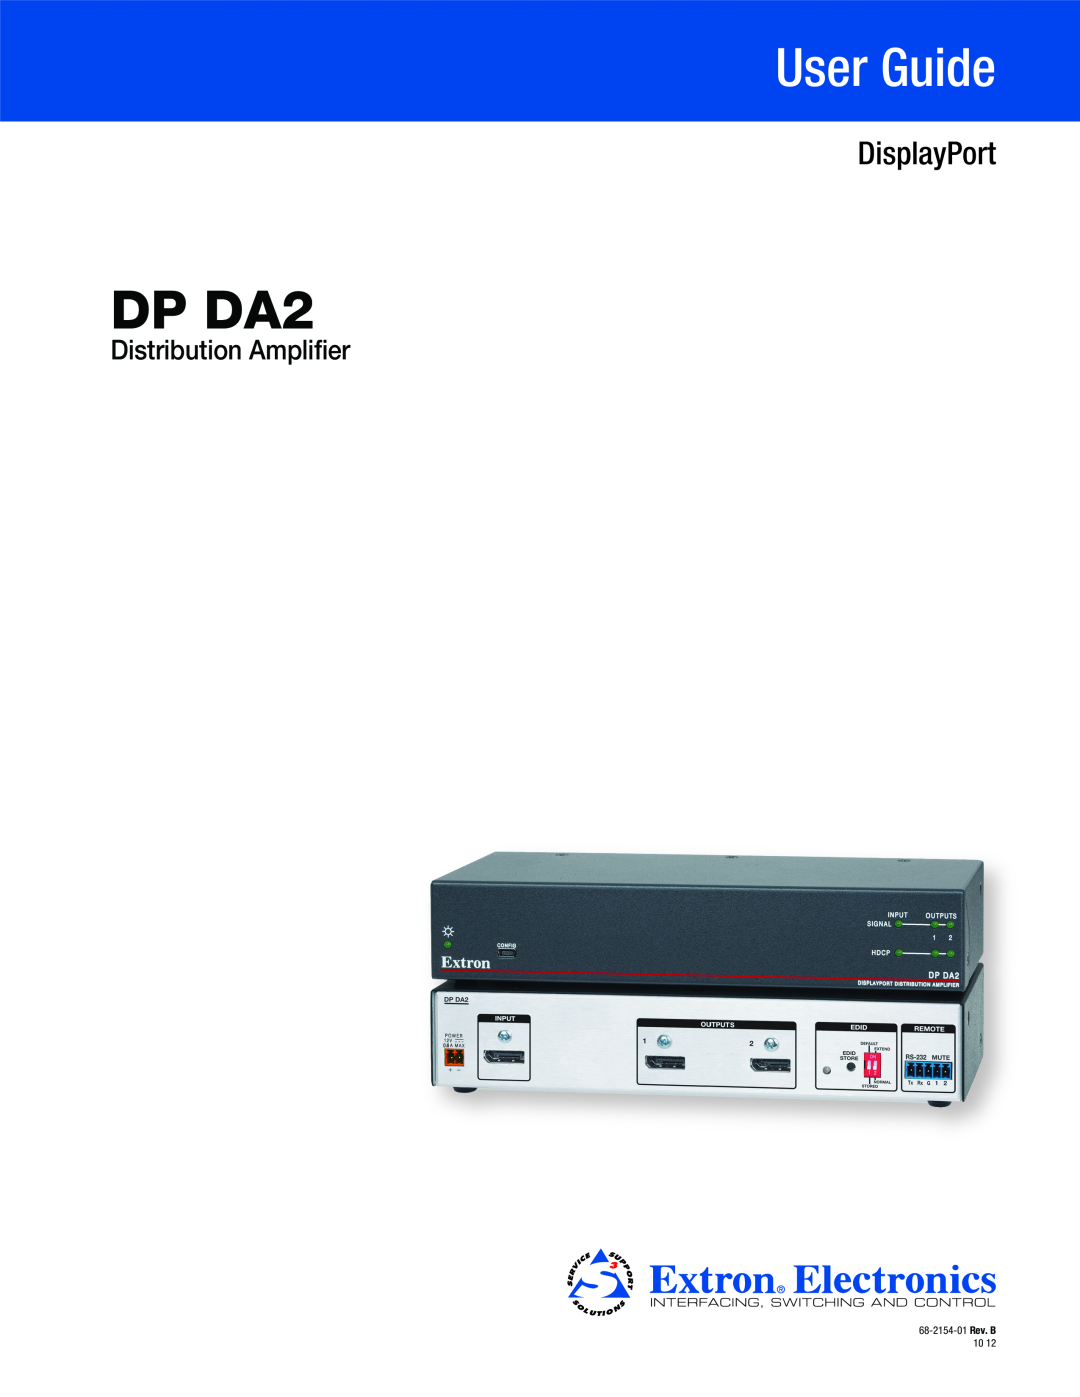 Extron electronic DP DA2 manual User Guide, DisplayPort, Distribution Ampliﬁer, 68-2154-01Rev. B 